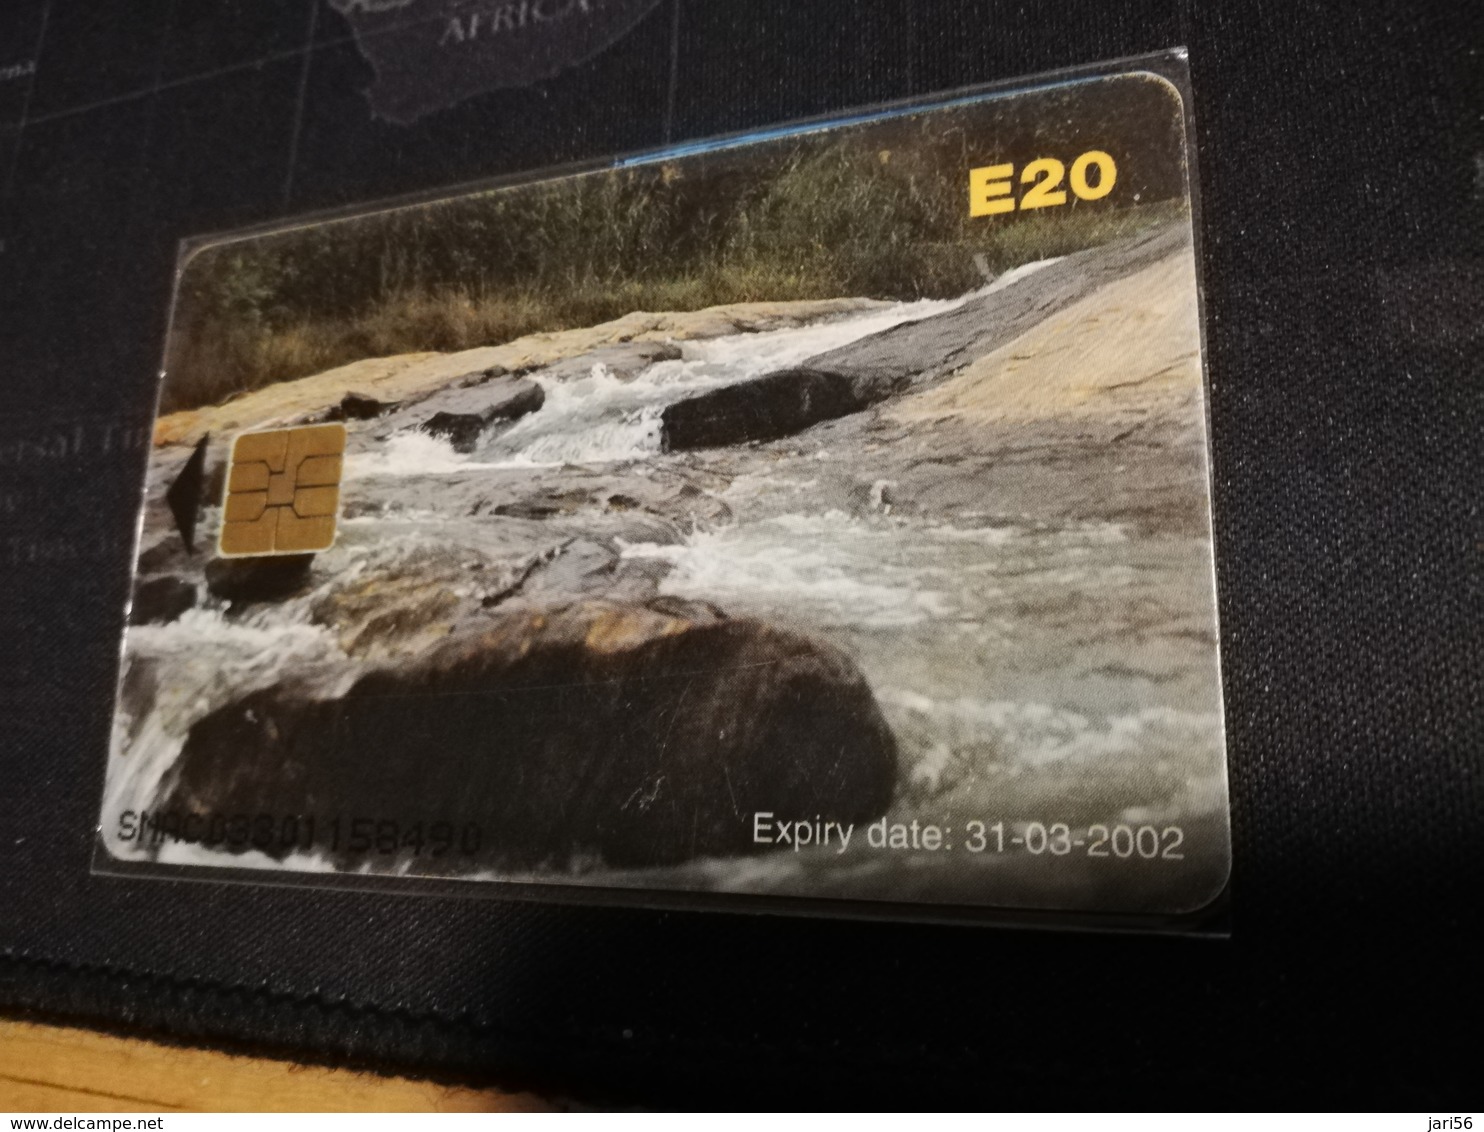 SWASILAND CHIPCARD  E20  ENVIROMENT     USED CARD **1054** - Swaziland